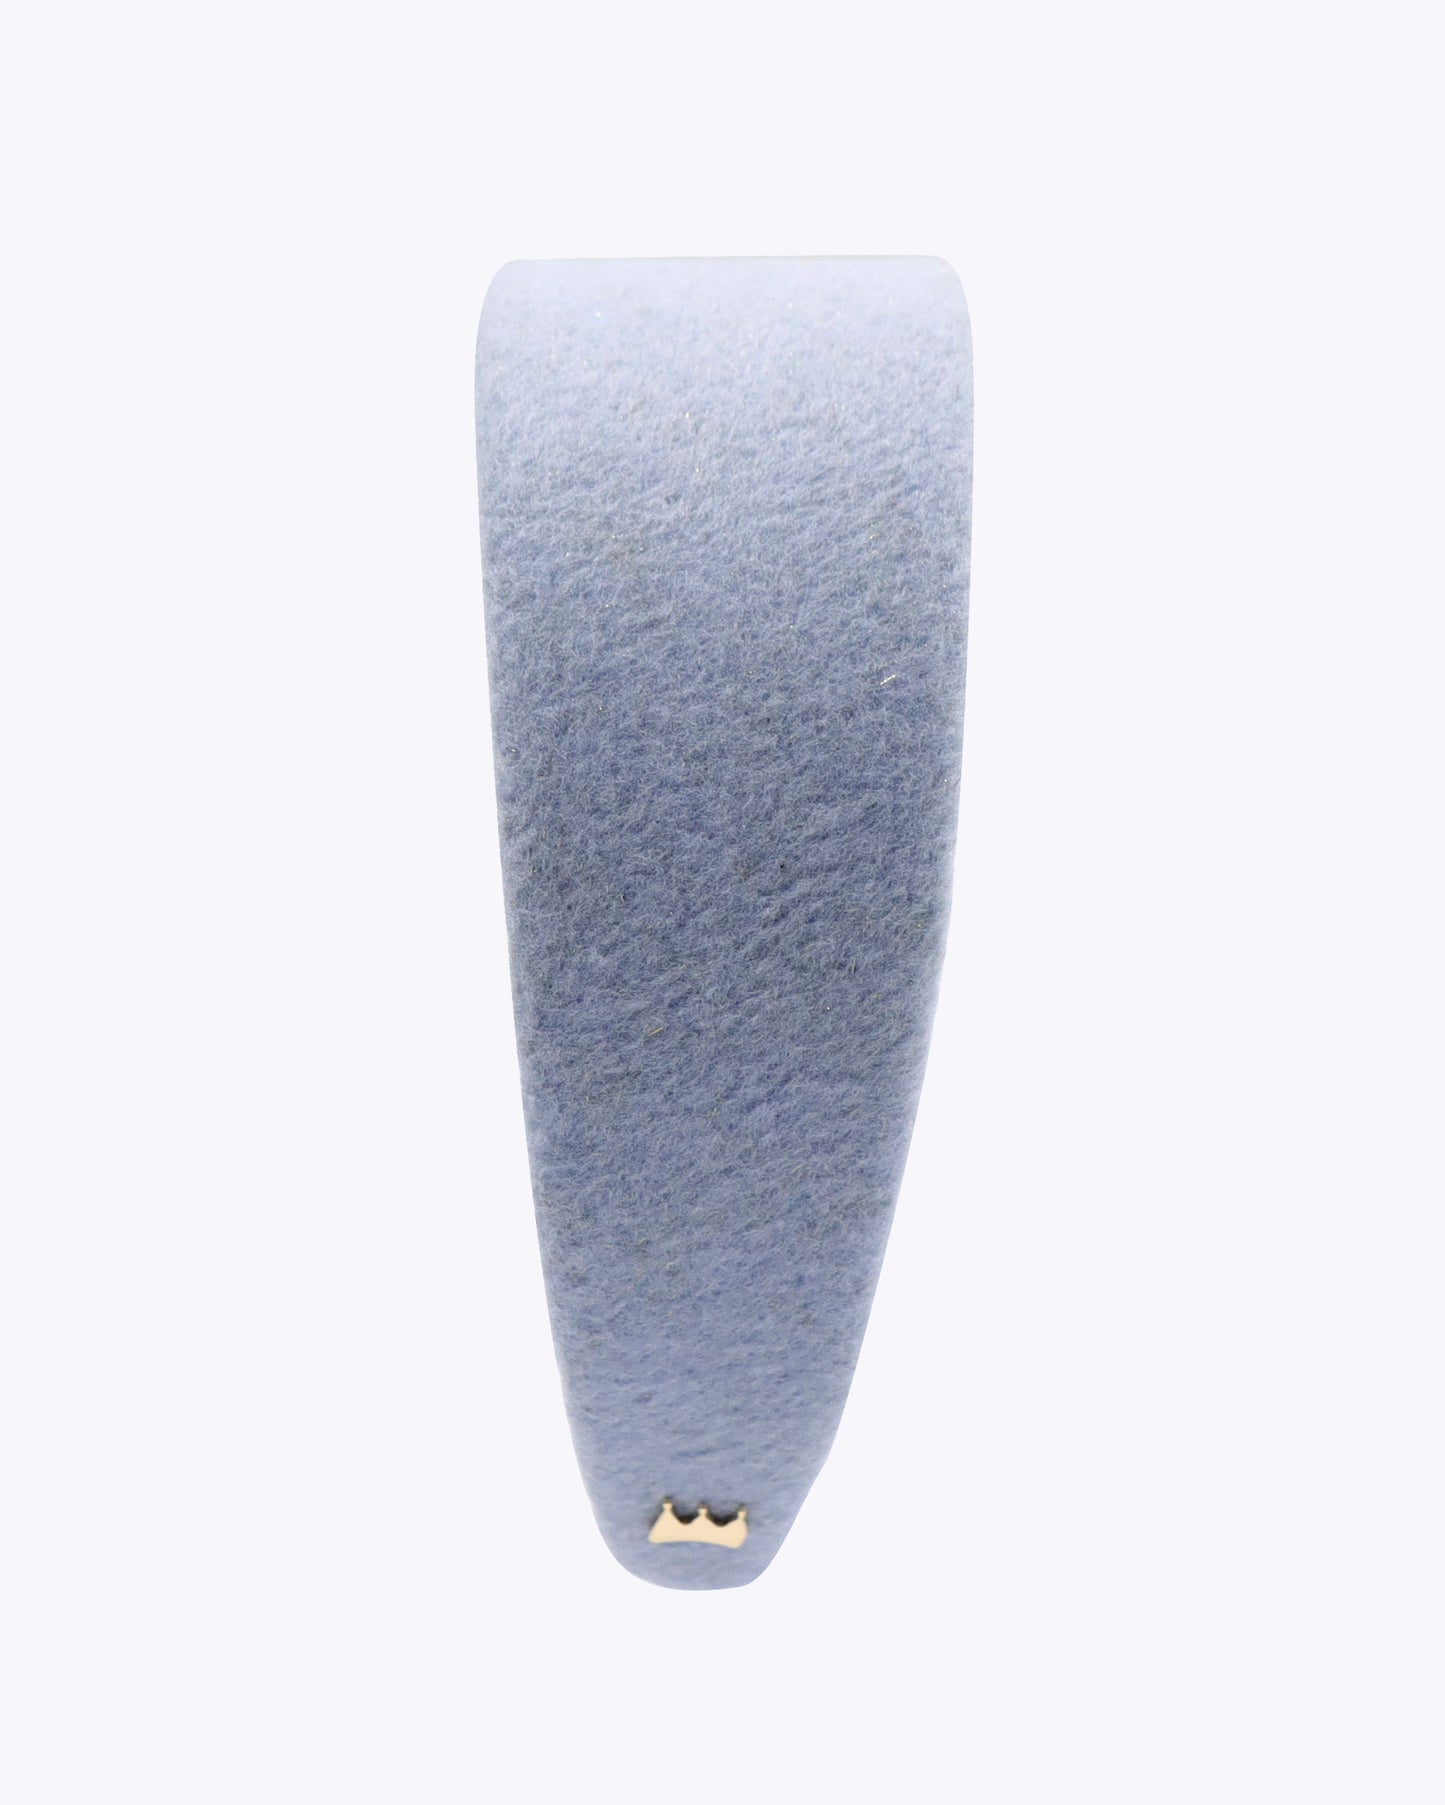 blue wool headband